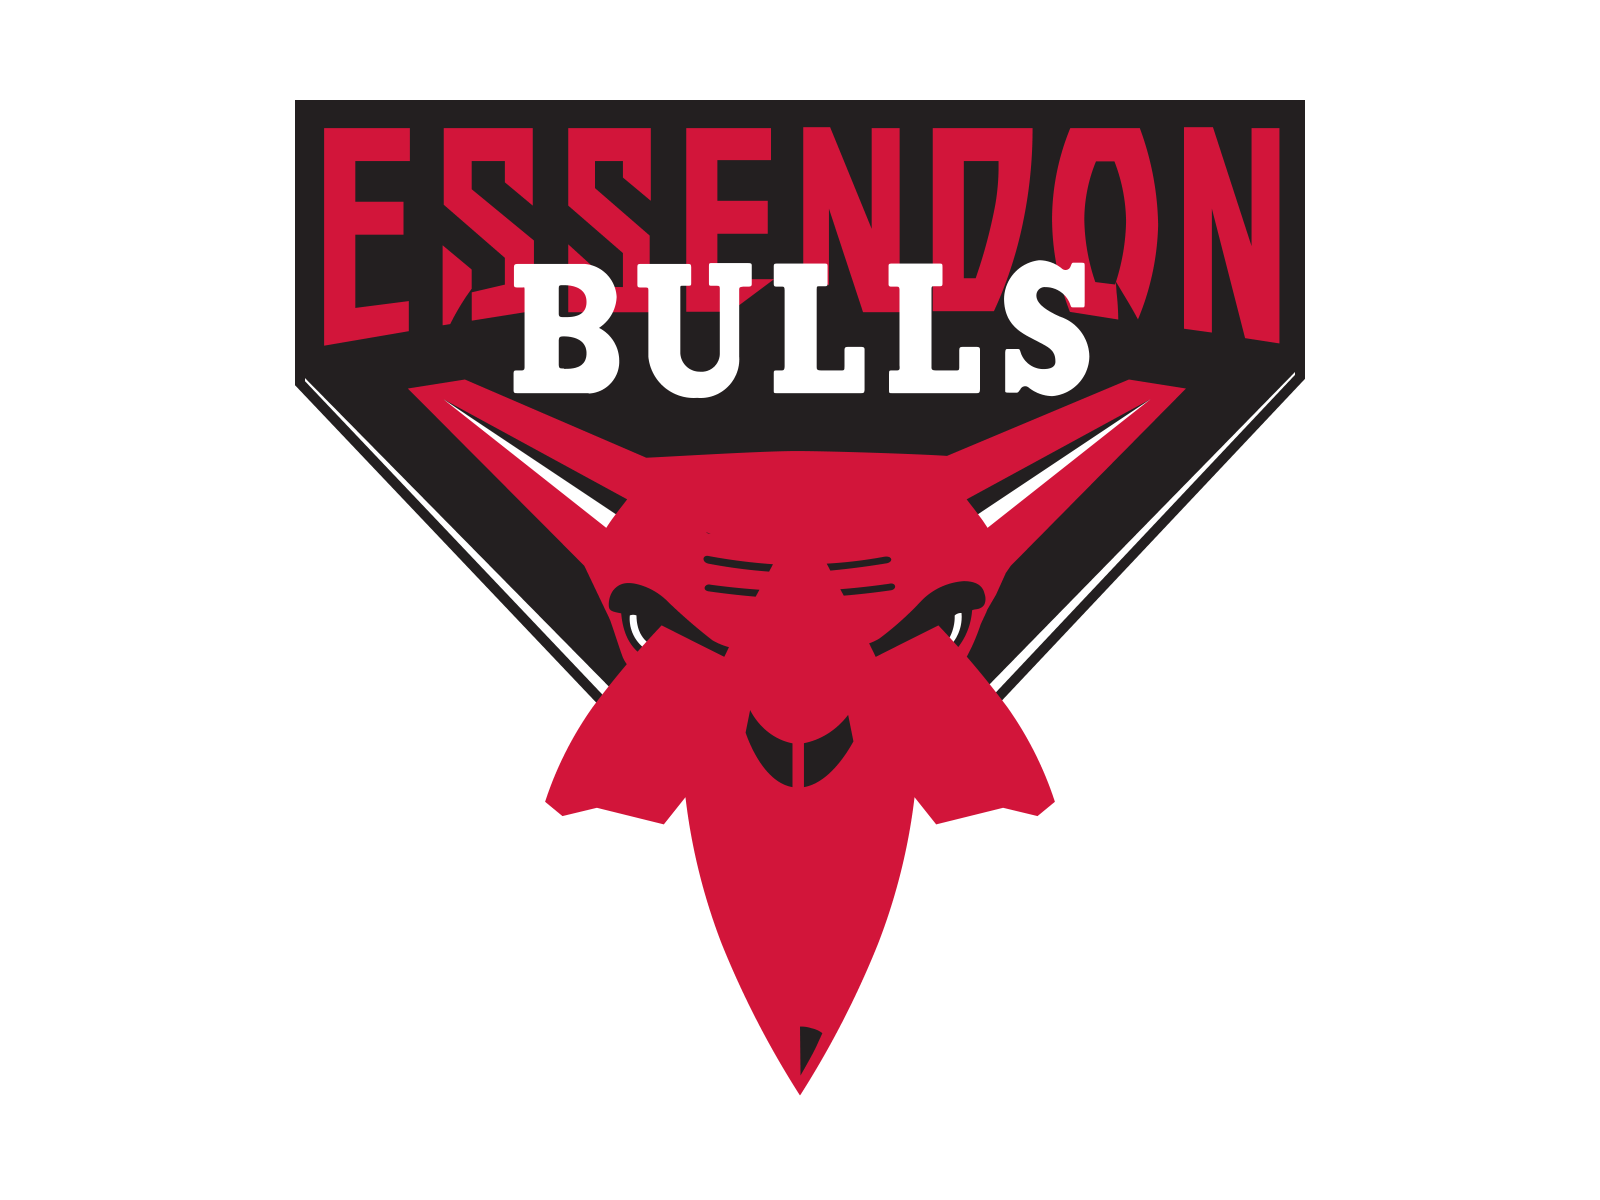 Essendon Bulls by Hello, I'm Ch'an 👋 on Dribbble